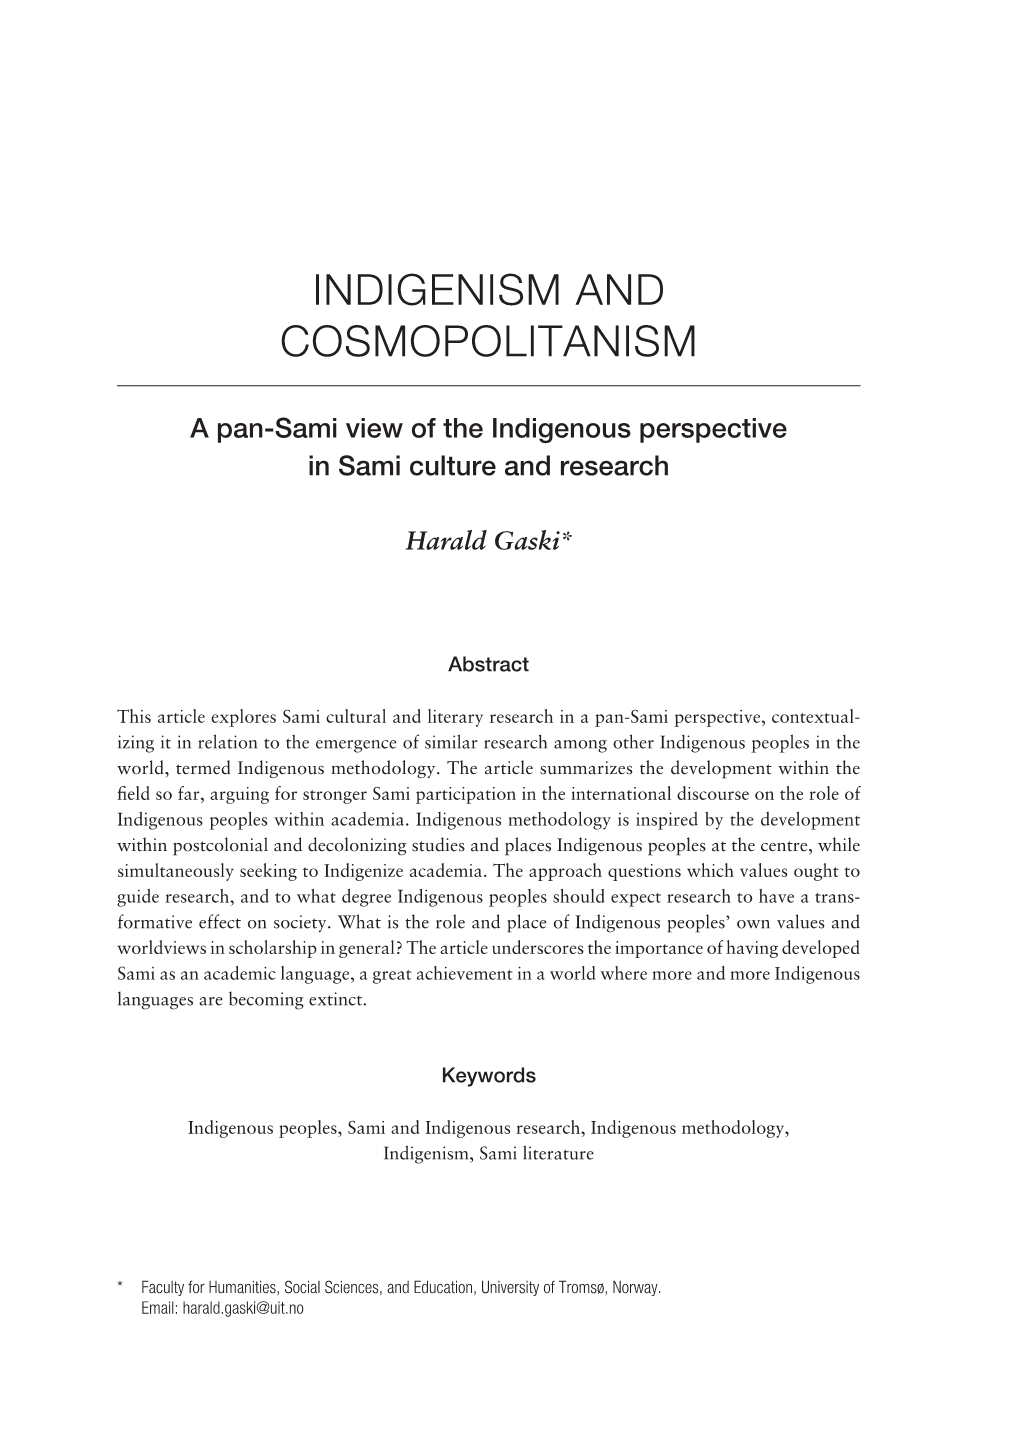 Indigenism and Cosmopolitanism